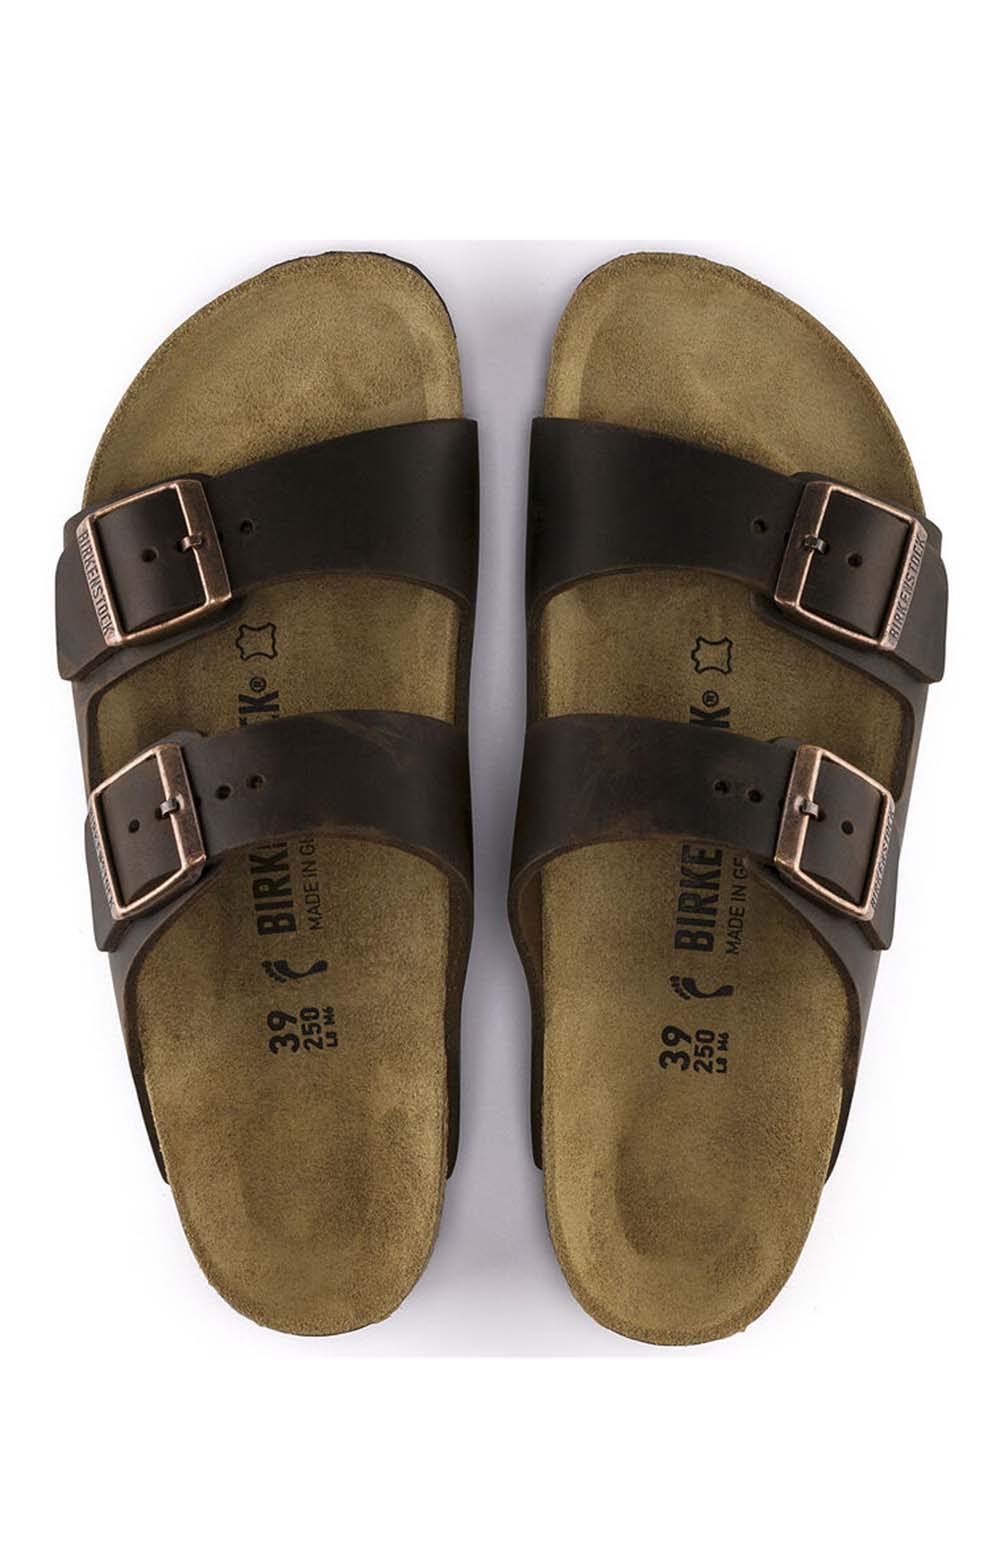  Premium leather Arizona Sandals Habana with EVA sole for extra comfort 